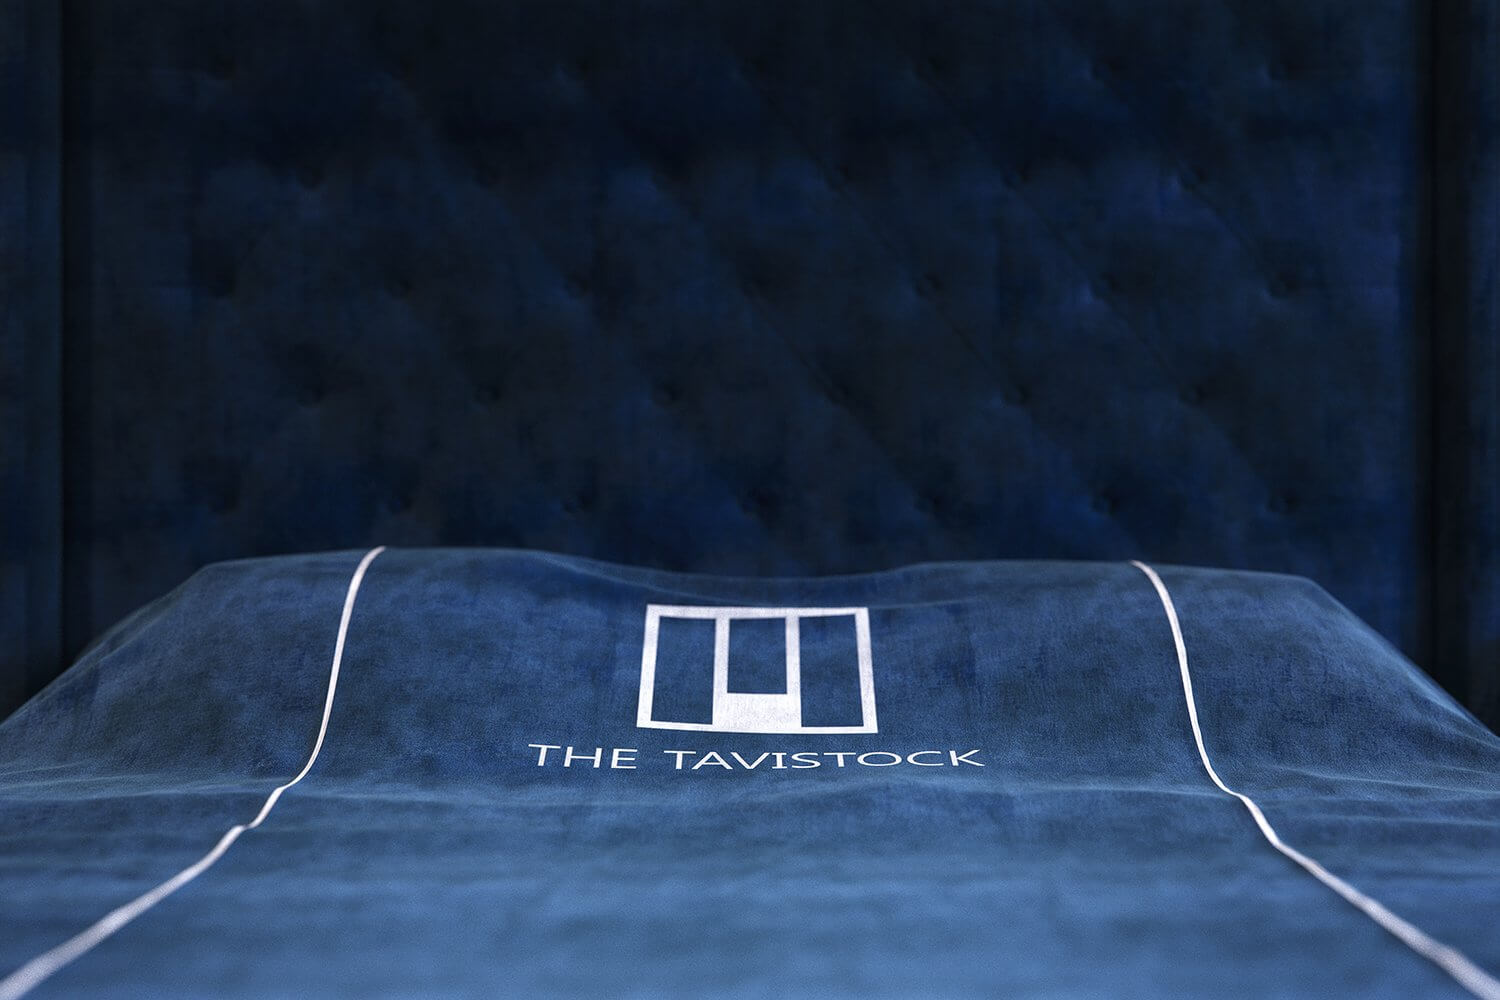 Tavistock apartment bedroom cover - cgi visualization